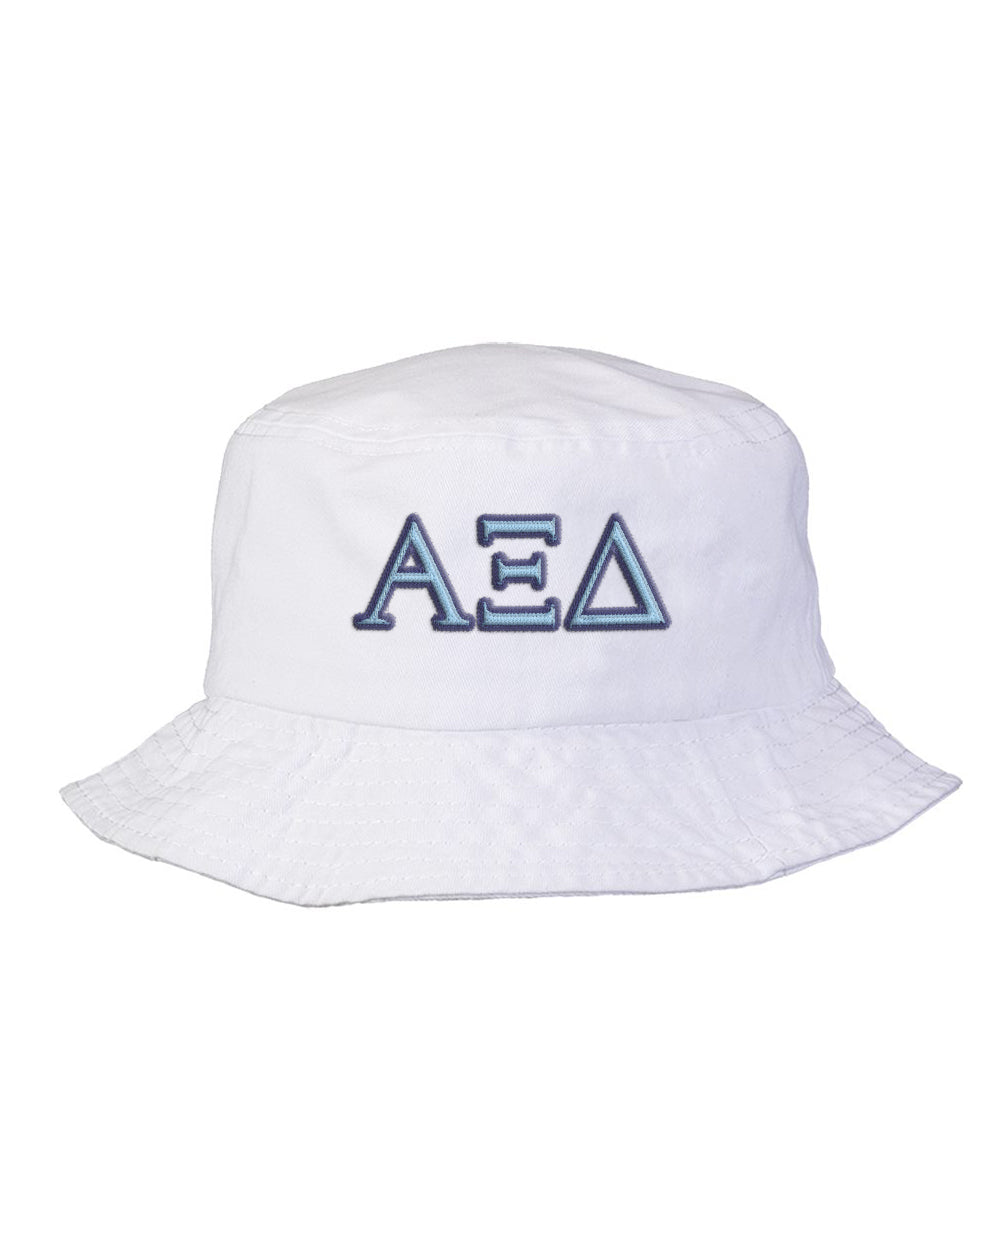 Alpha Xi Delta Embroidered Bucket Hat